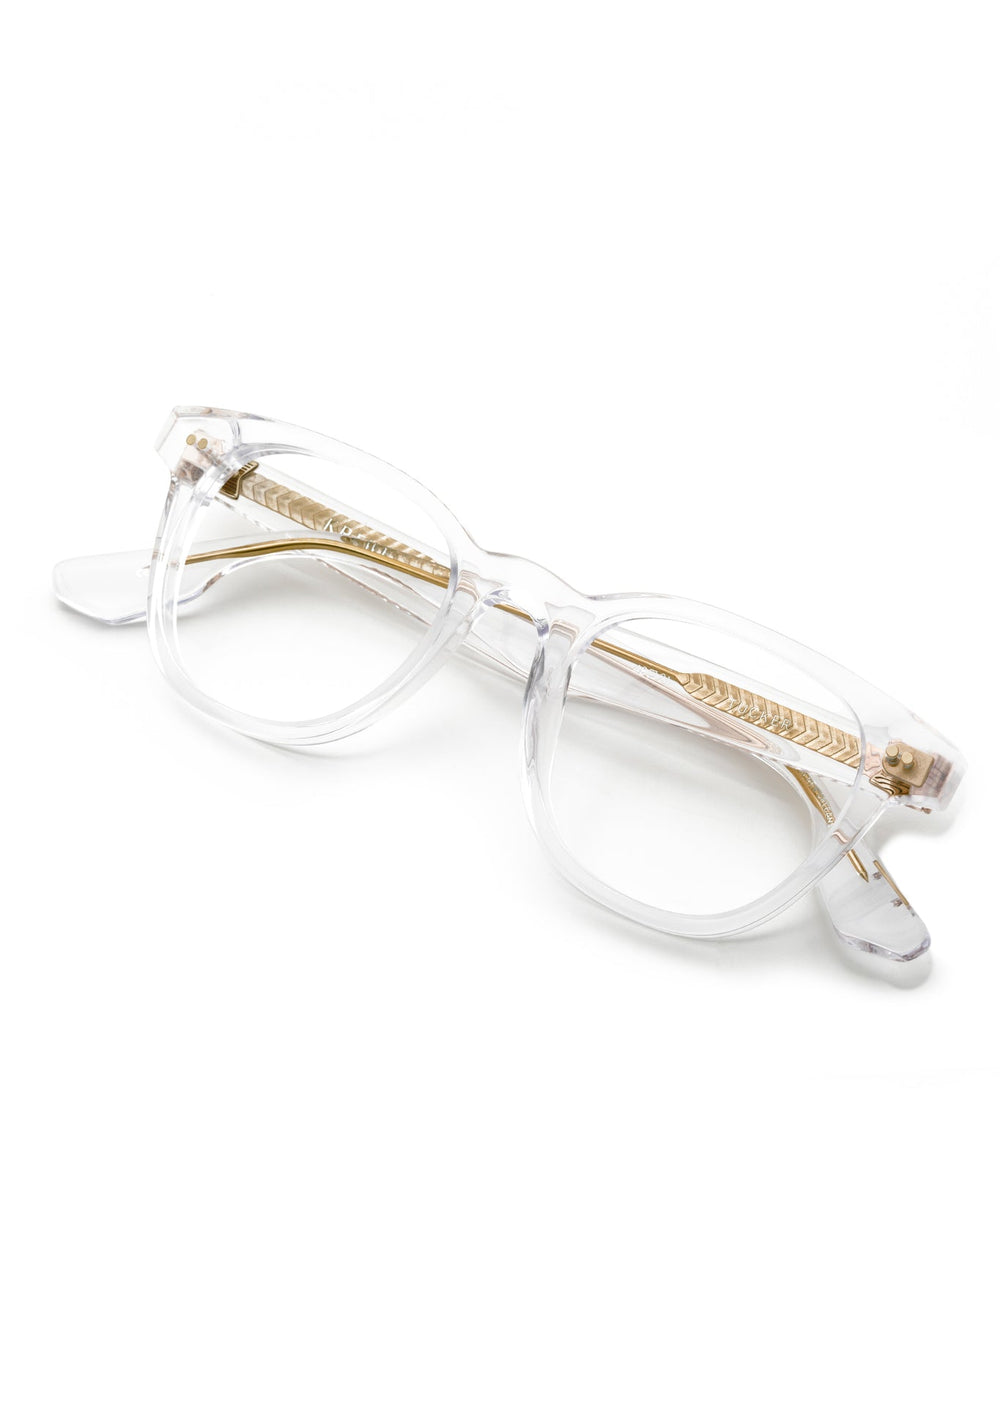 KREWE - TUCKER | Crystal Handcrafted, luxury clear acetate glasses